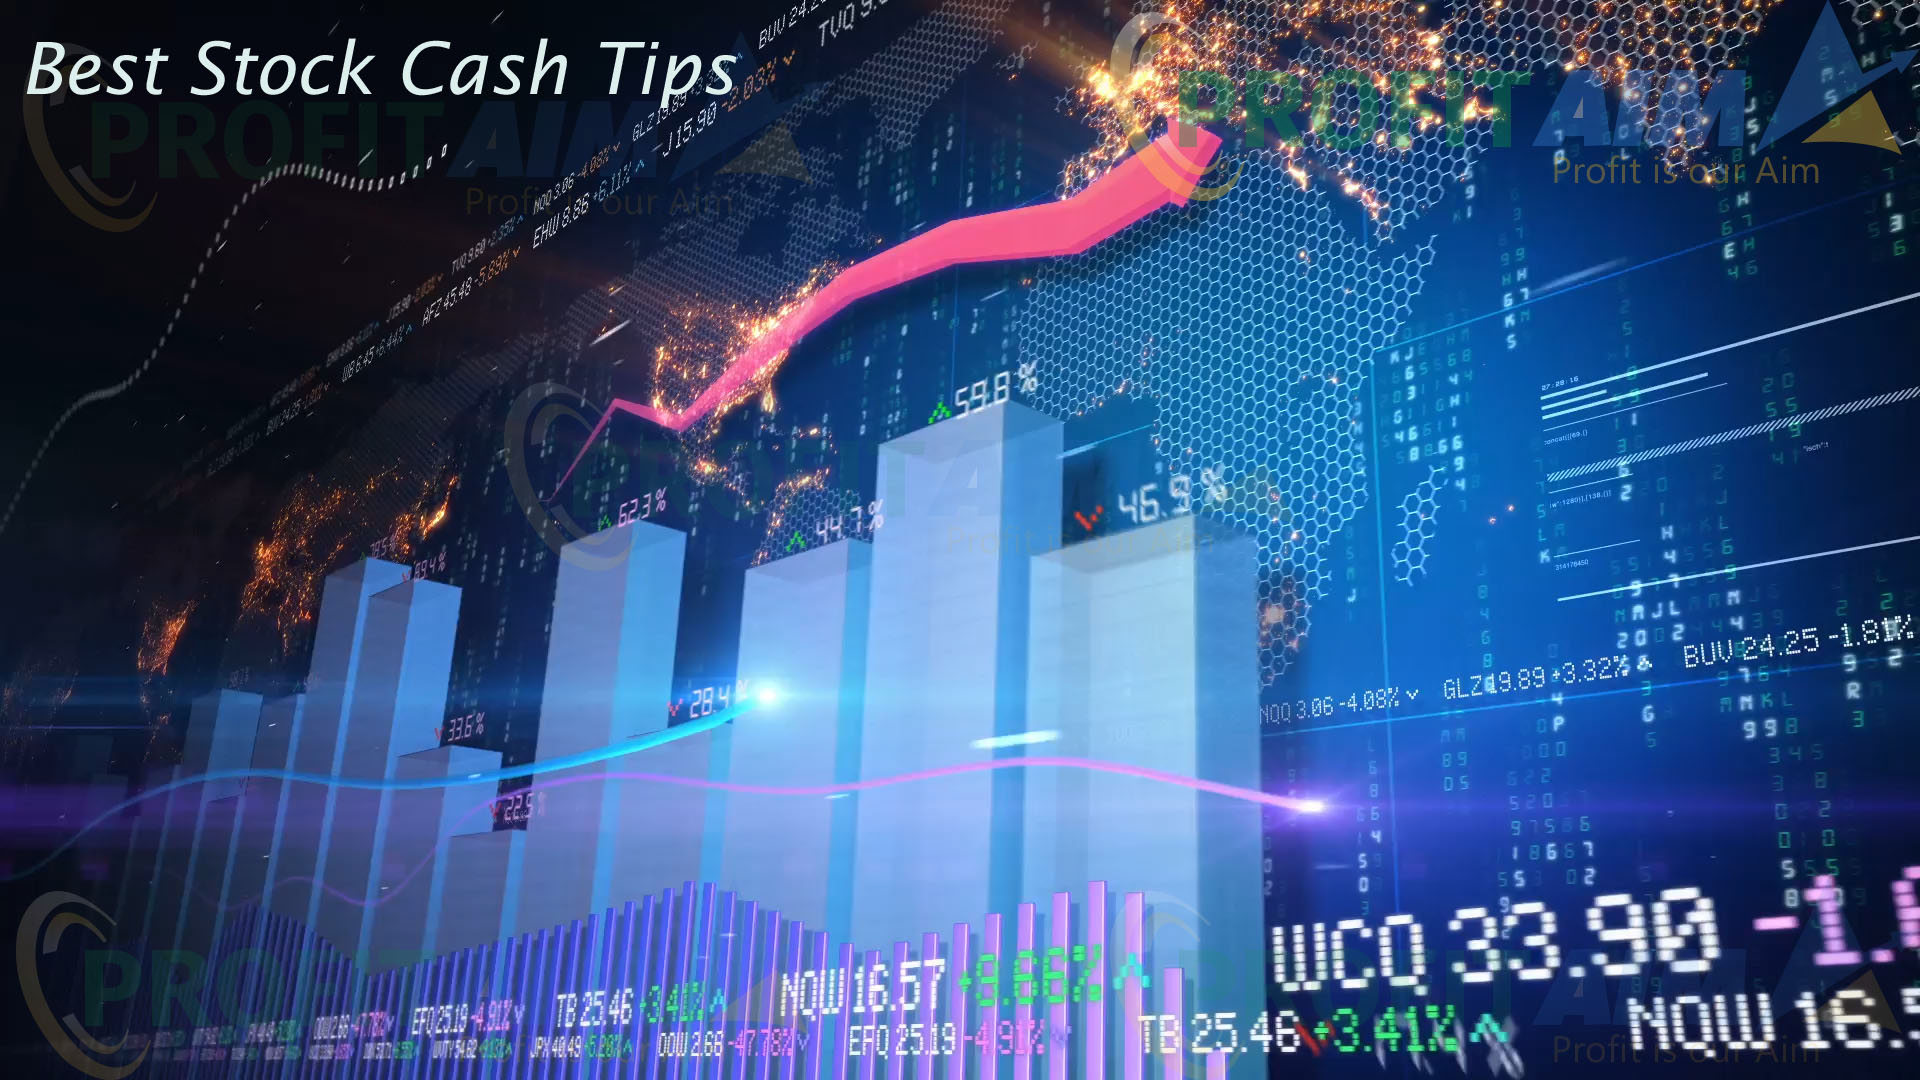 Best Stock Cash Tips Provider ProfitAim